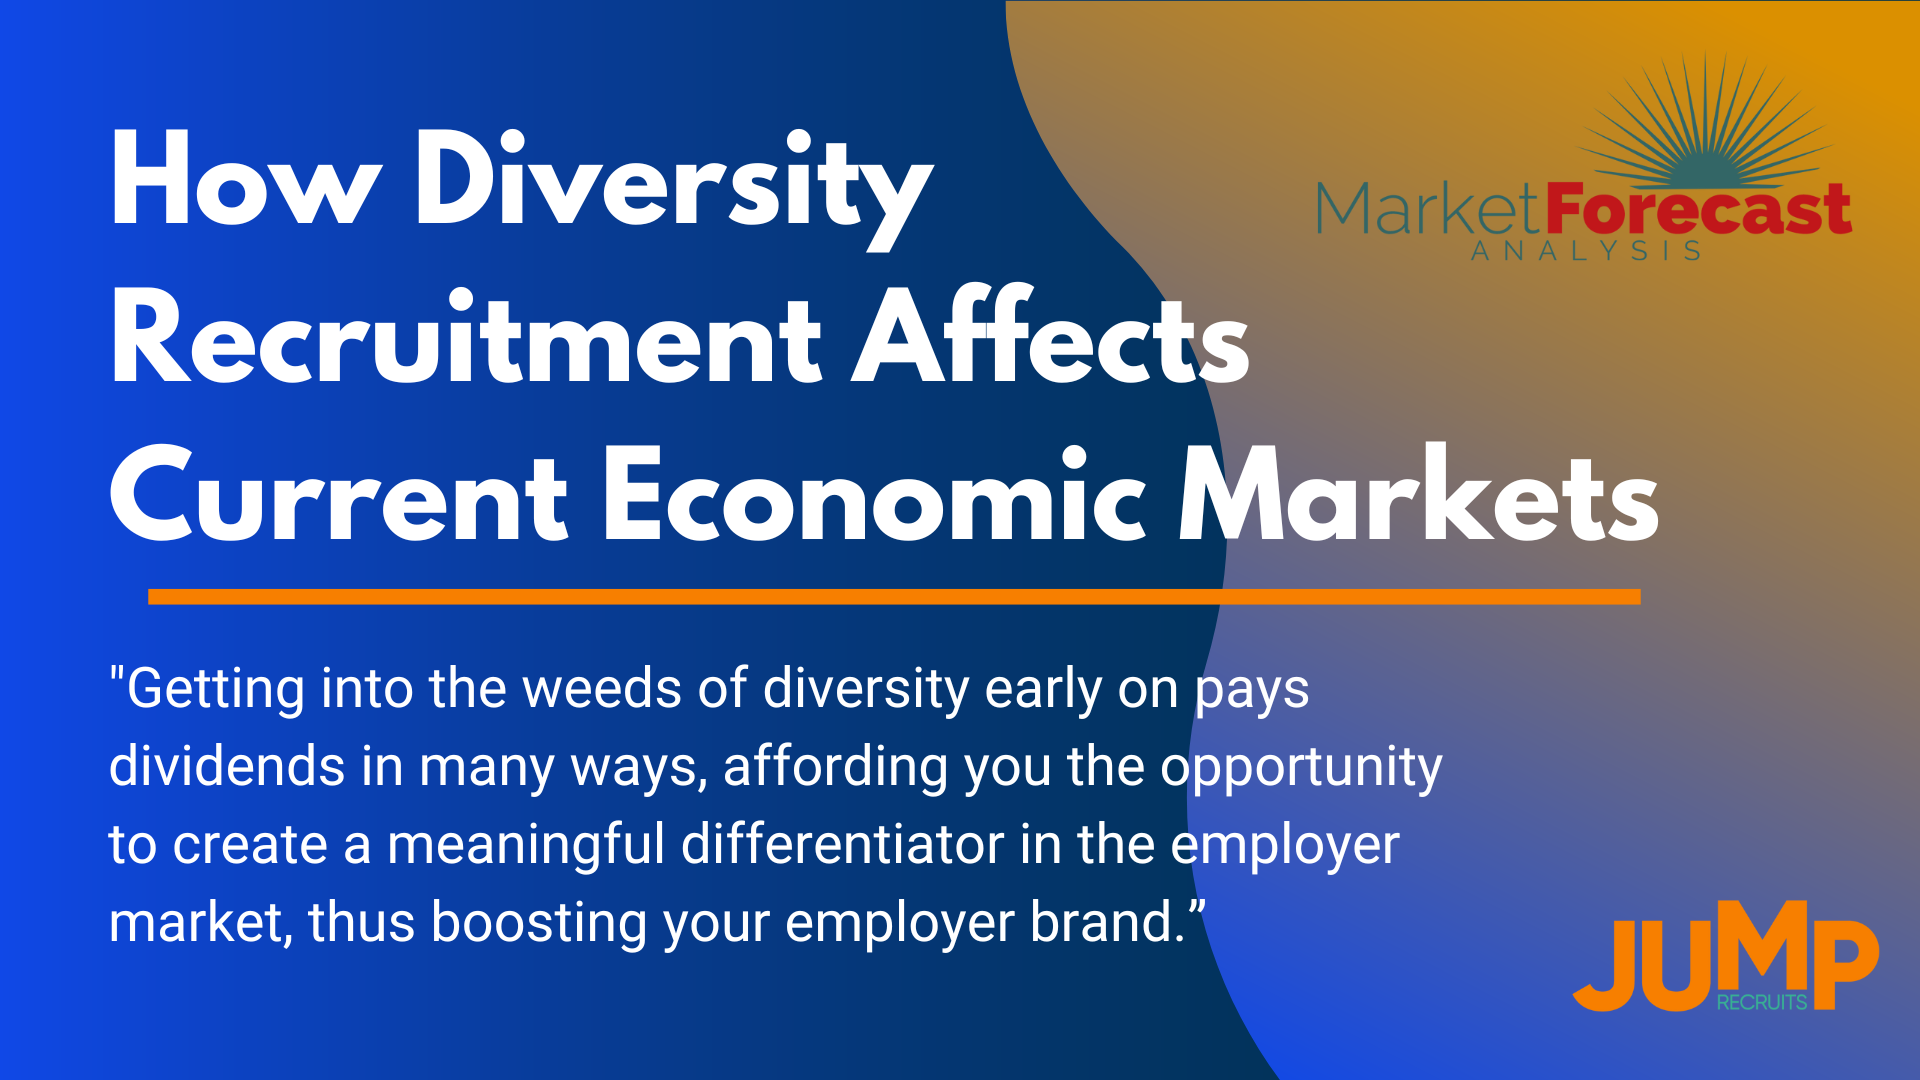 Jump Recruits Shares How Diversity Recruitment Affects Current Economic Markets